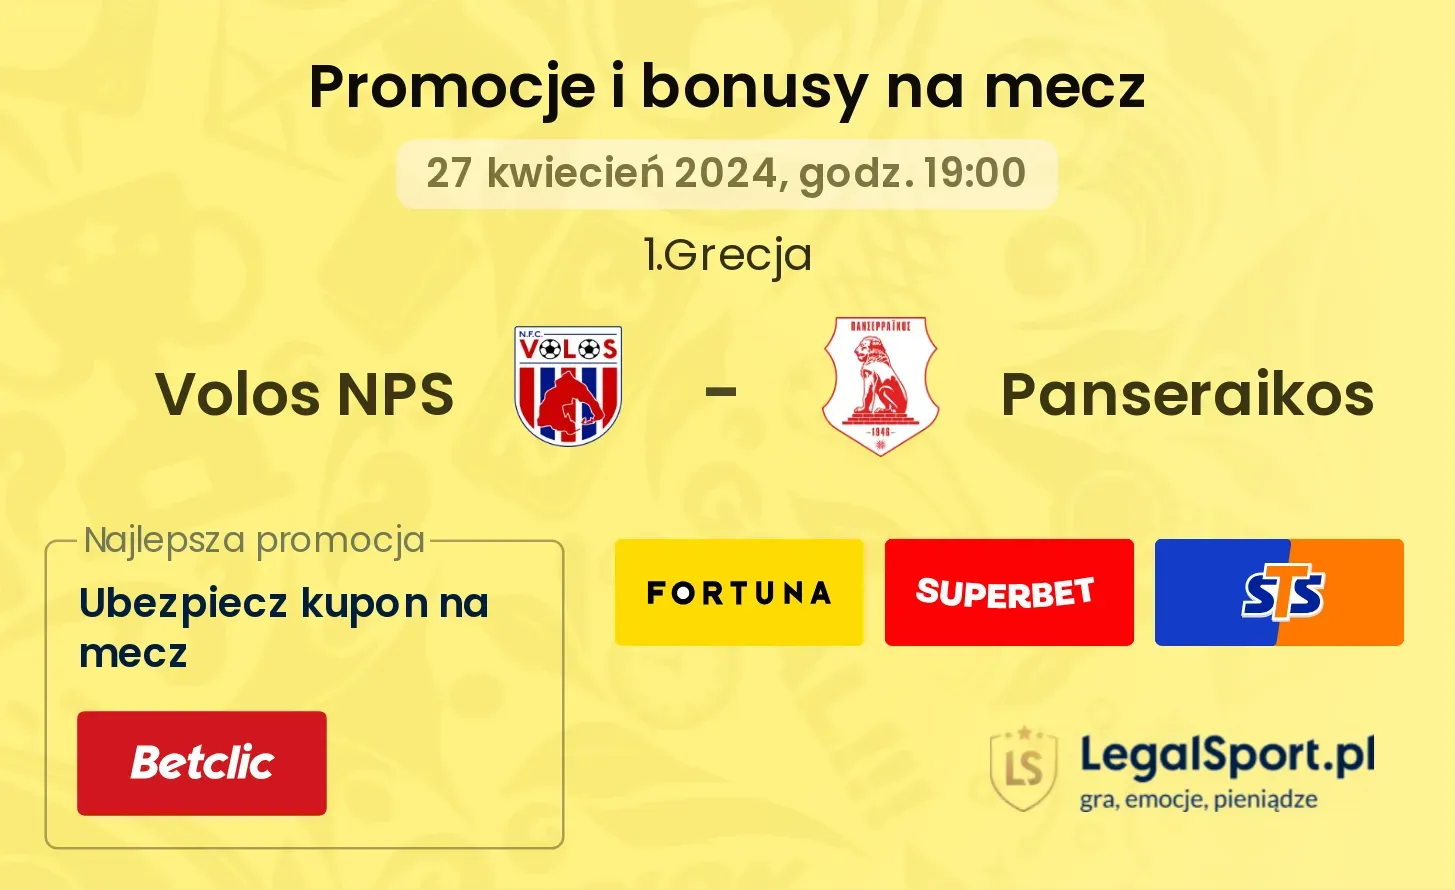 Volos NPS - Panseraikos promocje bonusy na mecz